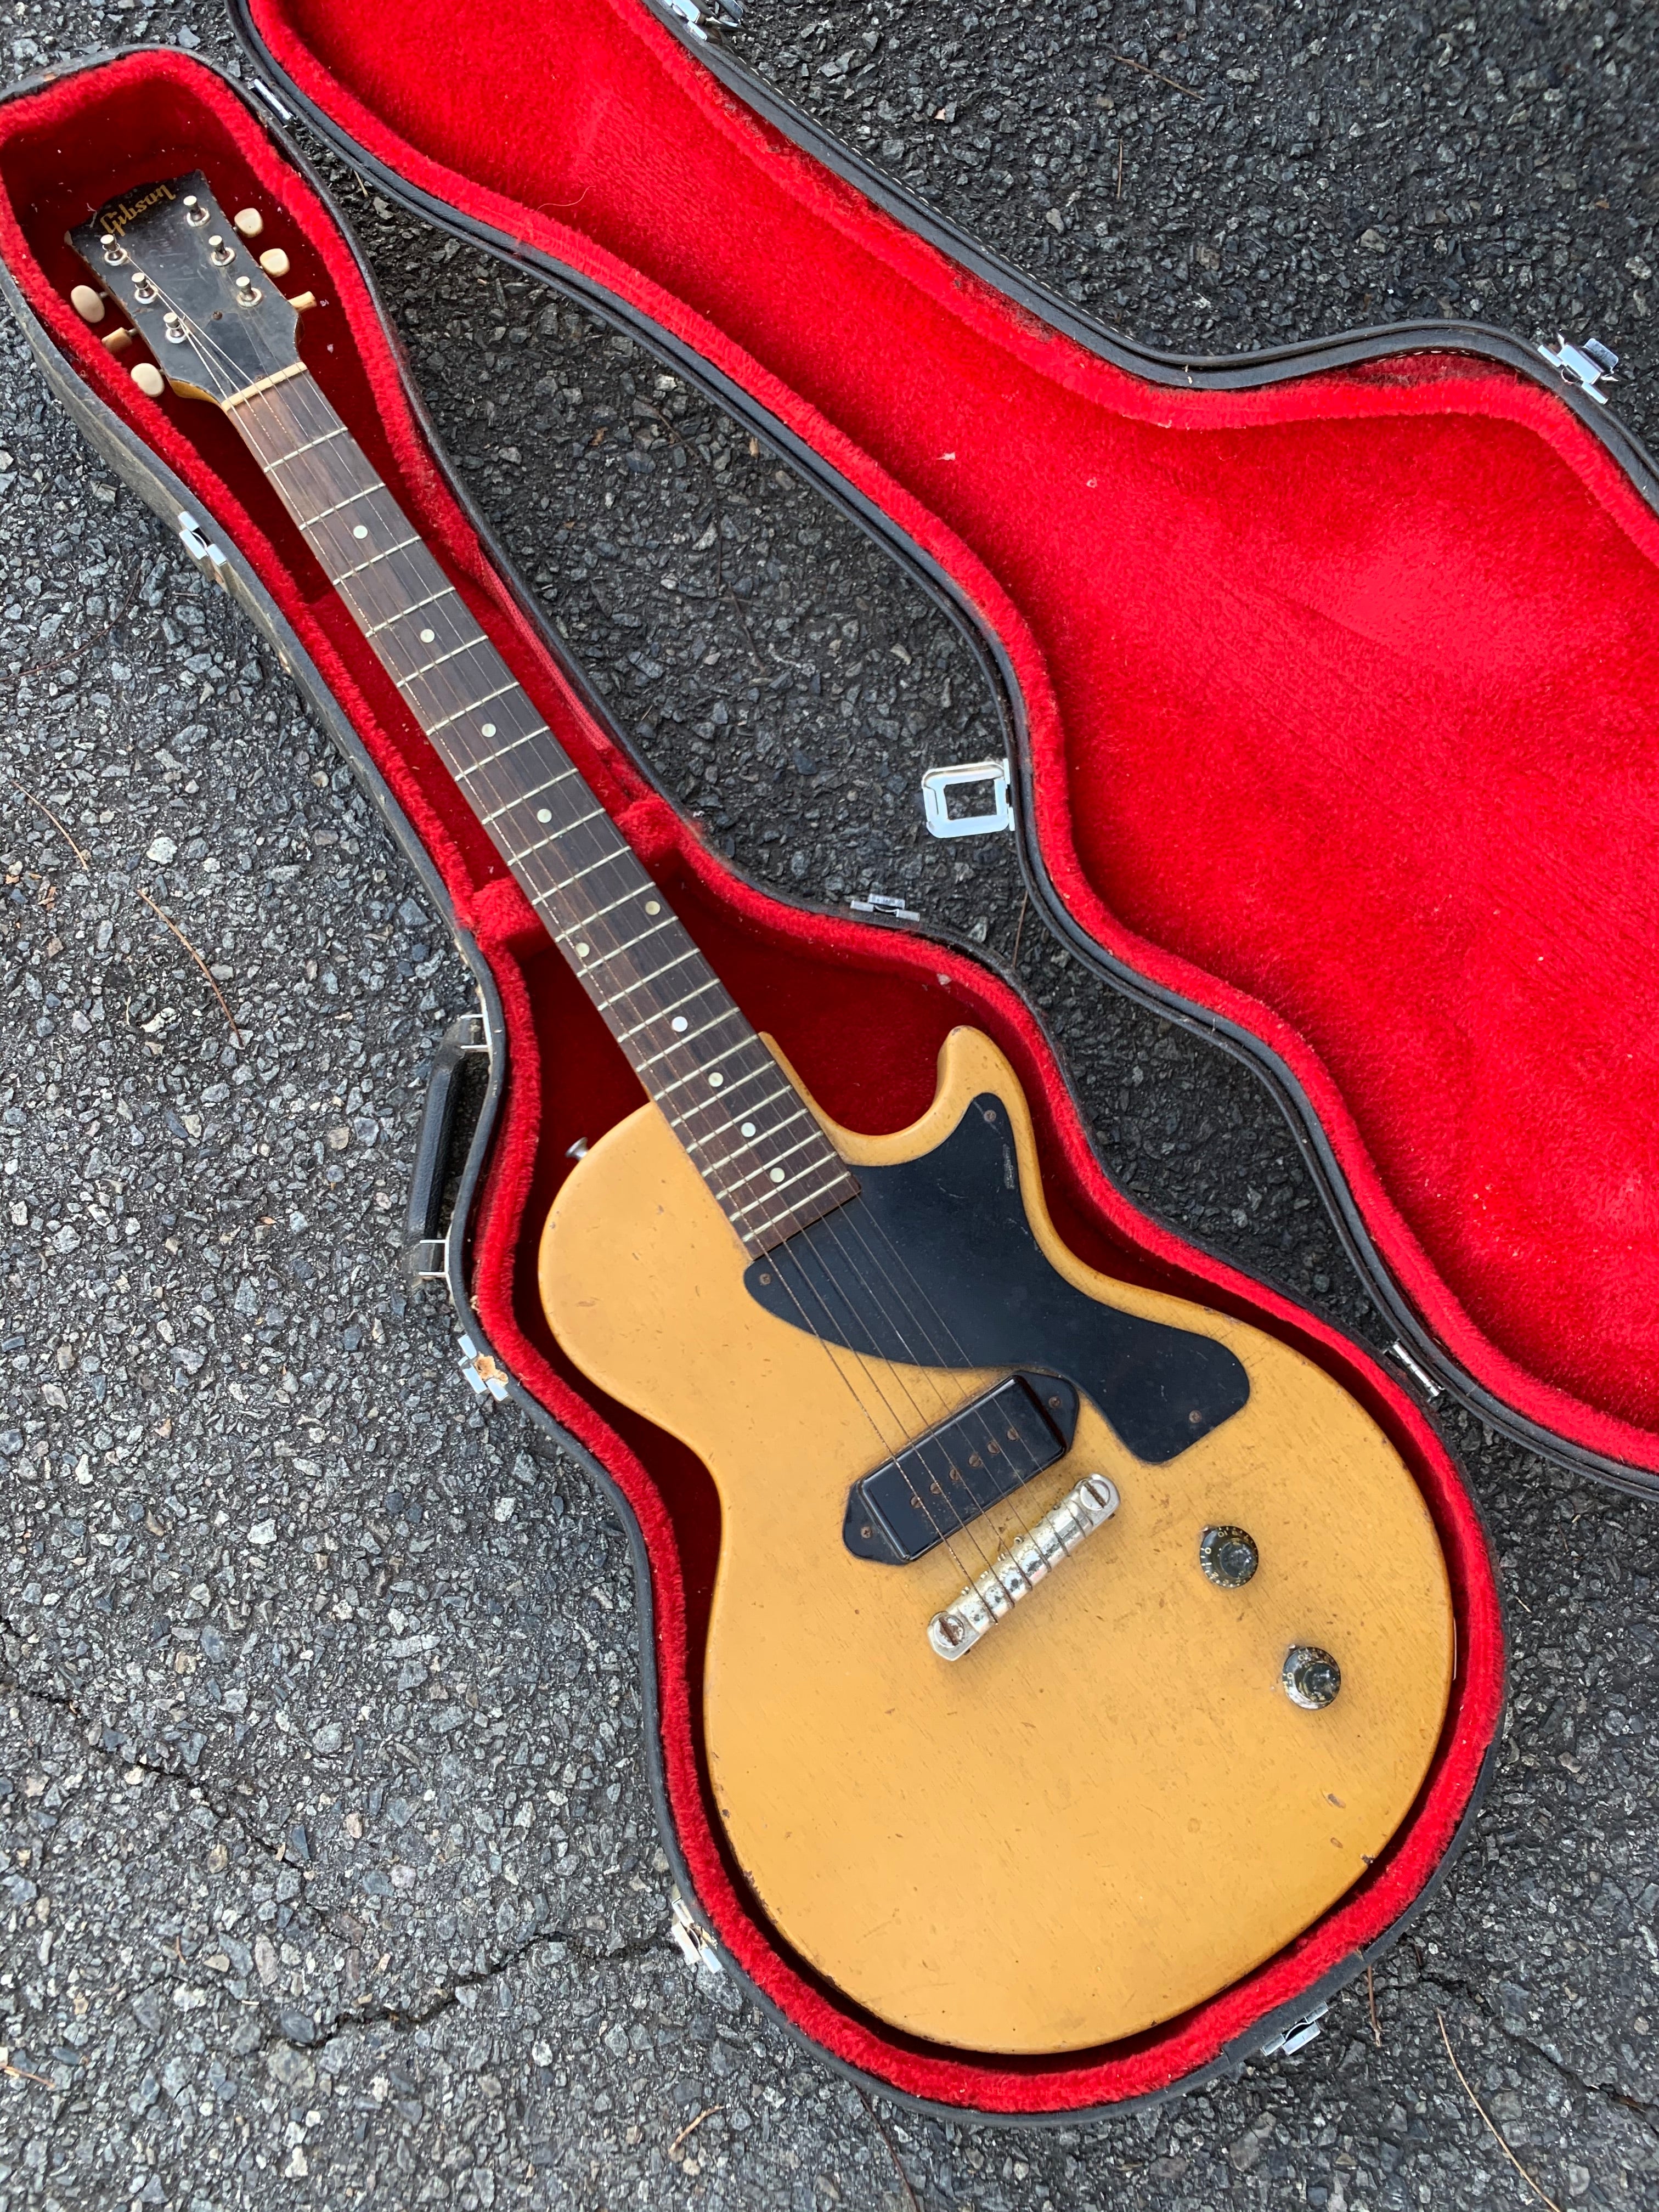 1958 Gibson Les Paul TV Model guitar